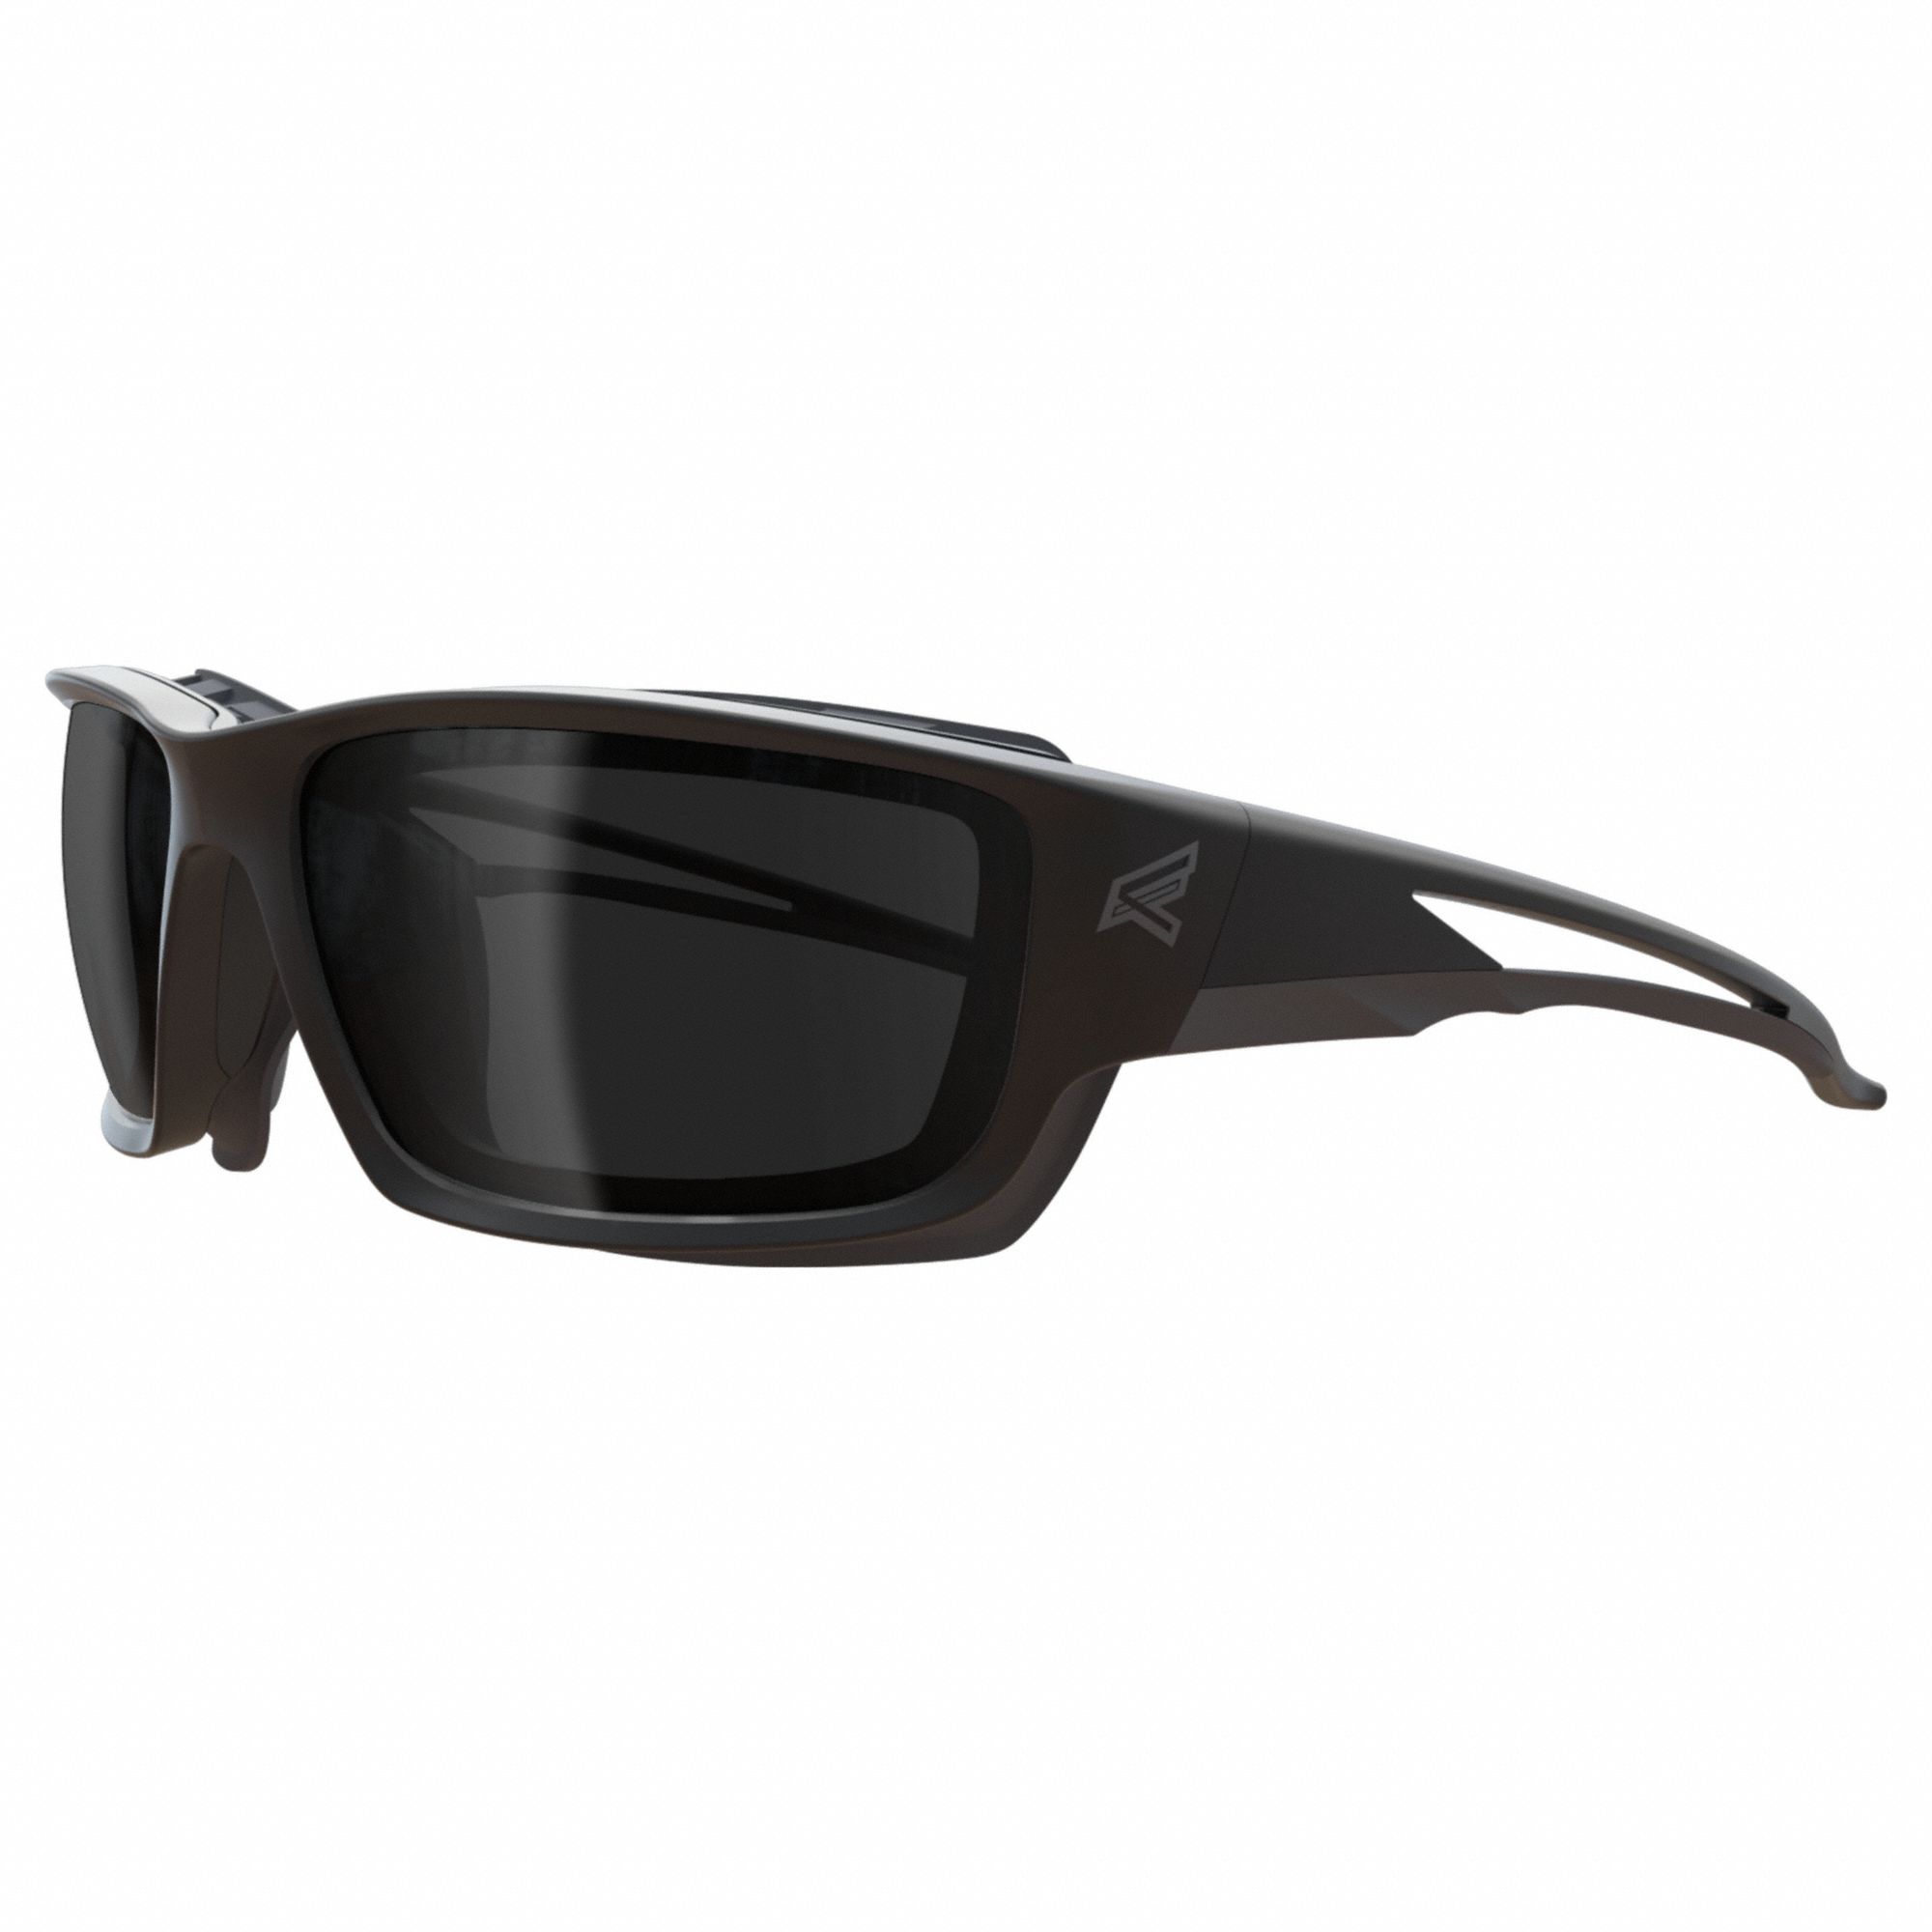 EDGE EYEWEAR Safety Glasses: Anti-Fog /Anti-Scratch, Eye Socket Foam  Lining, Wraparound Frame, Smoke